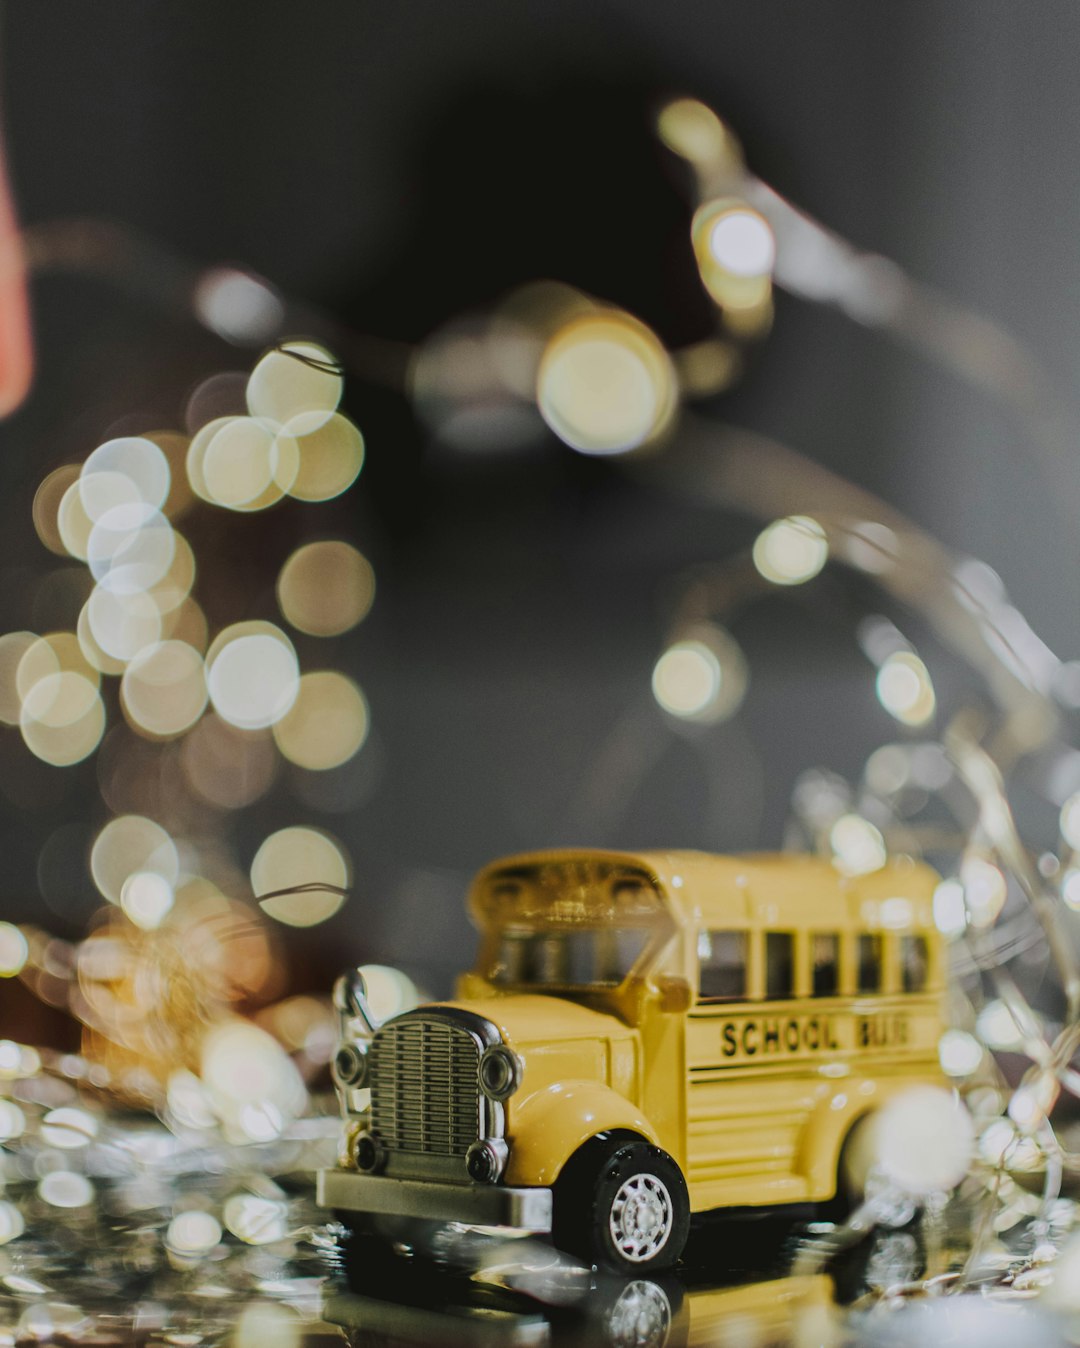 selective focus photo of yellow toy school bus